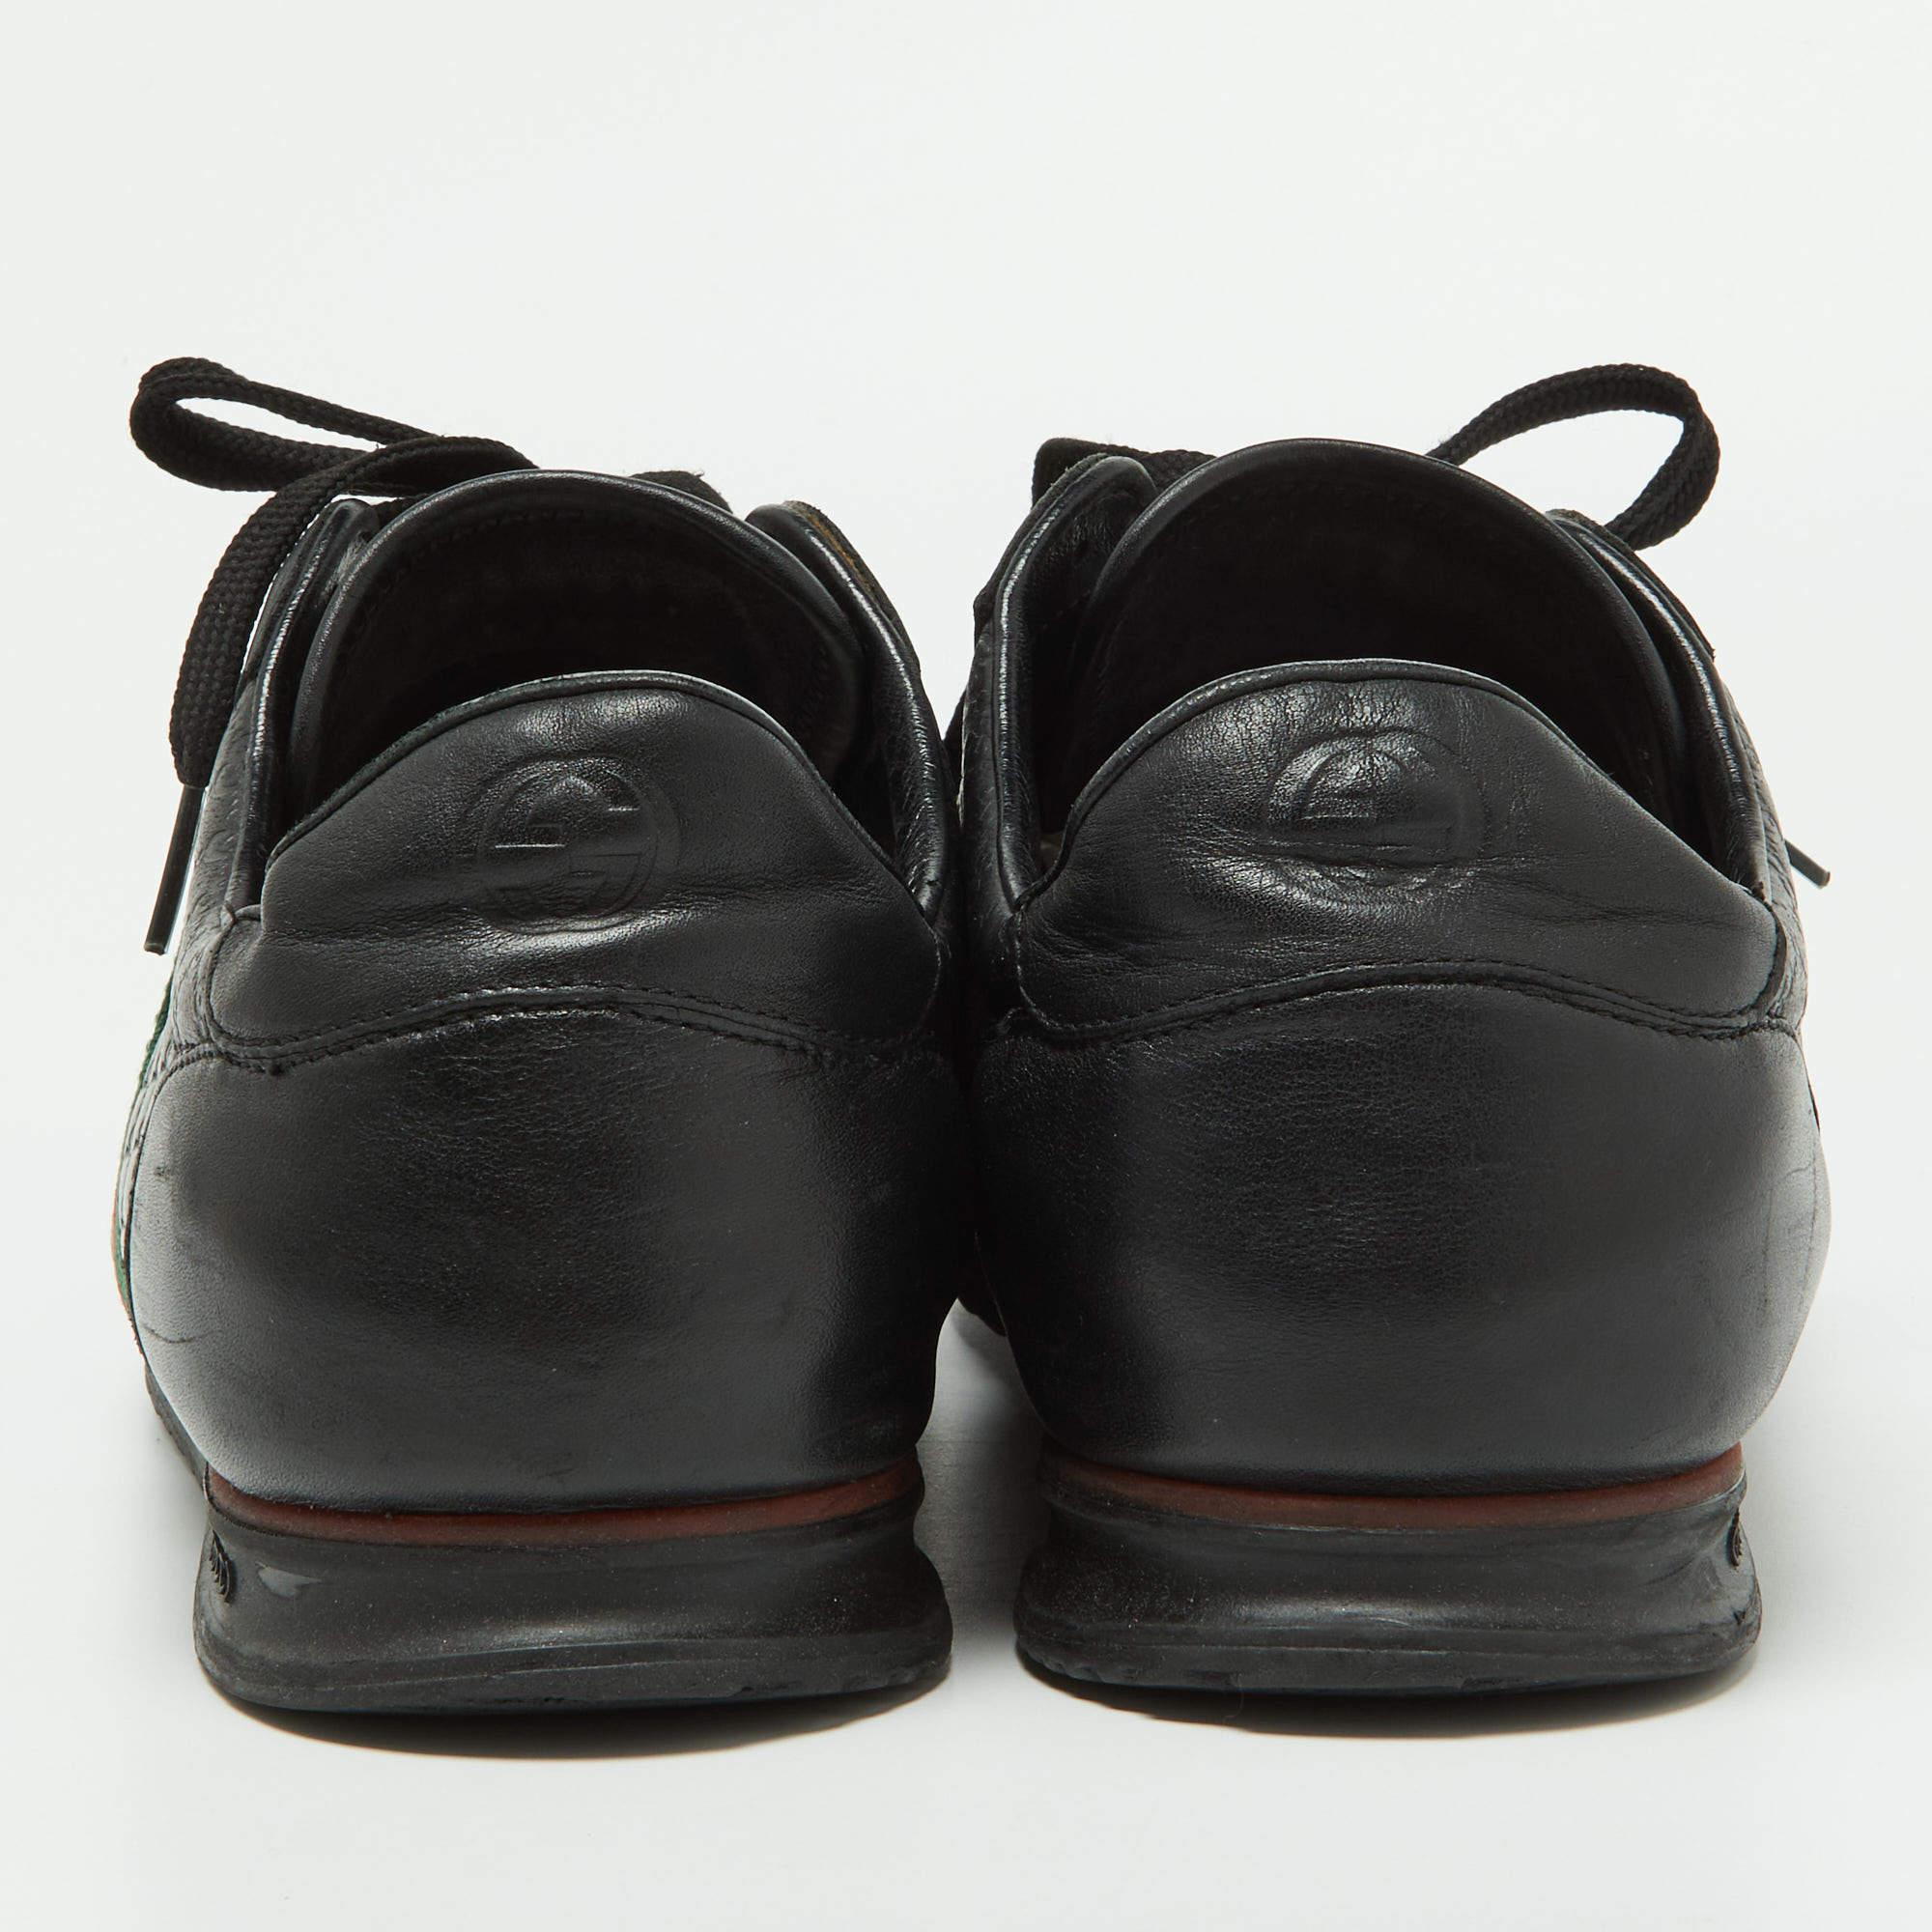  Gucci Black Leather Web Lace Up Sneakers Size 45.5 Pour hommes 